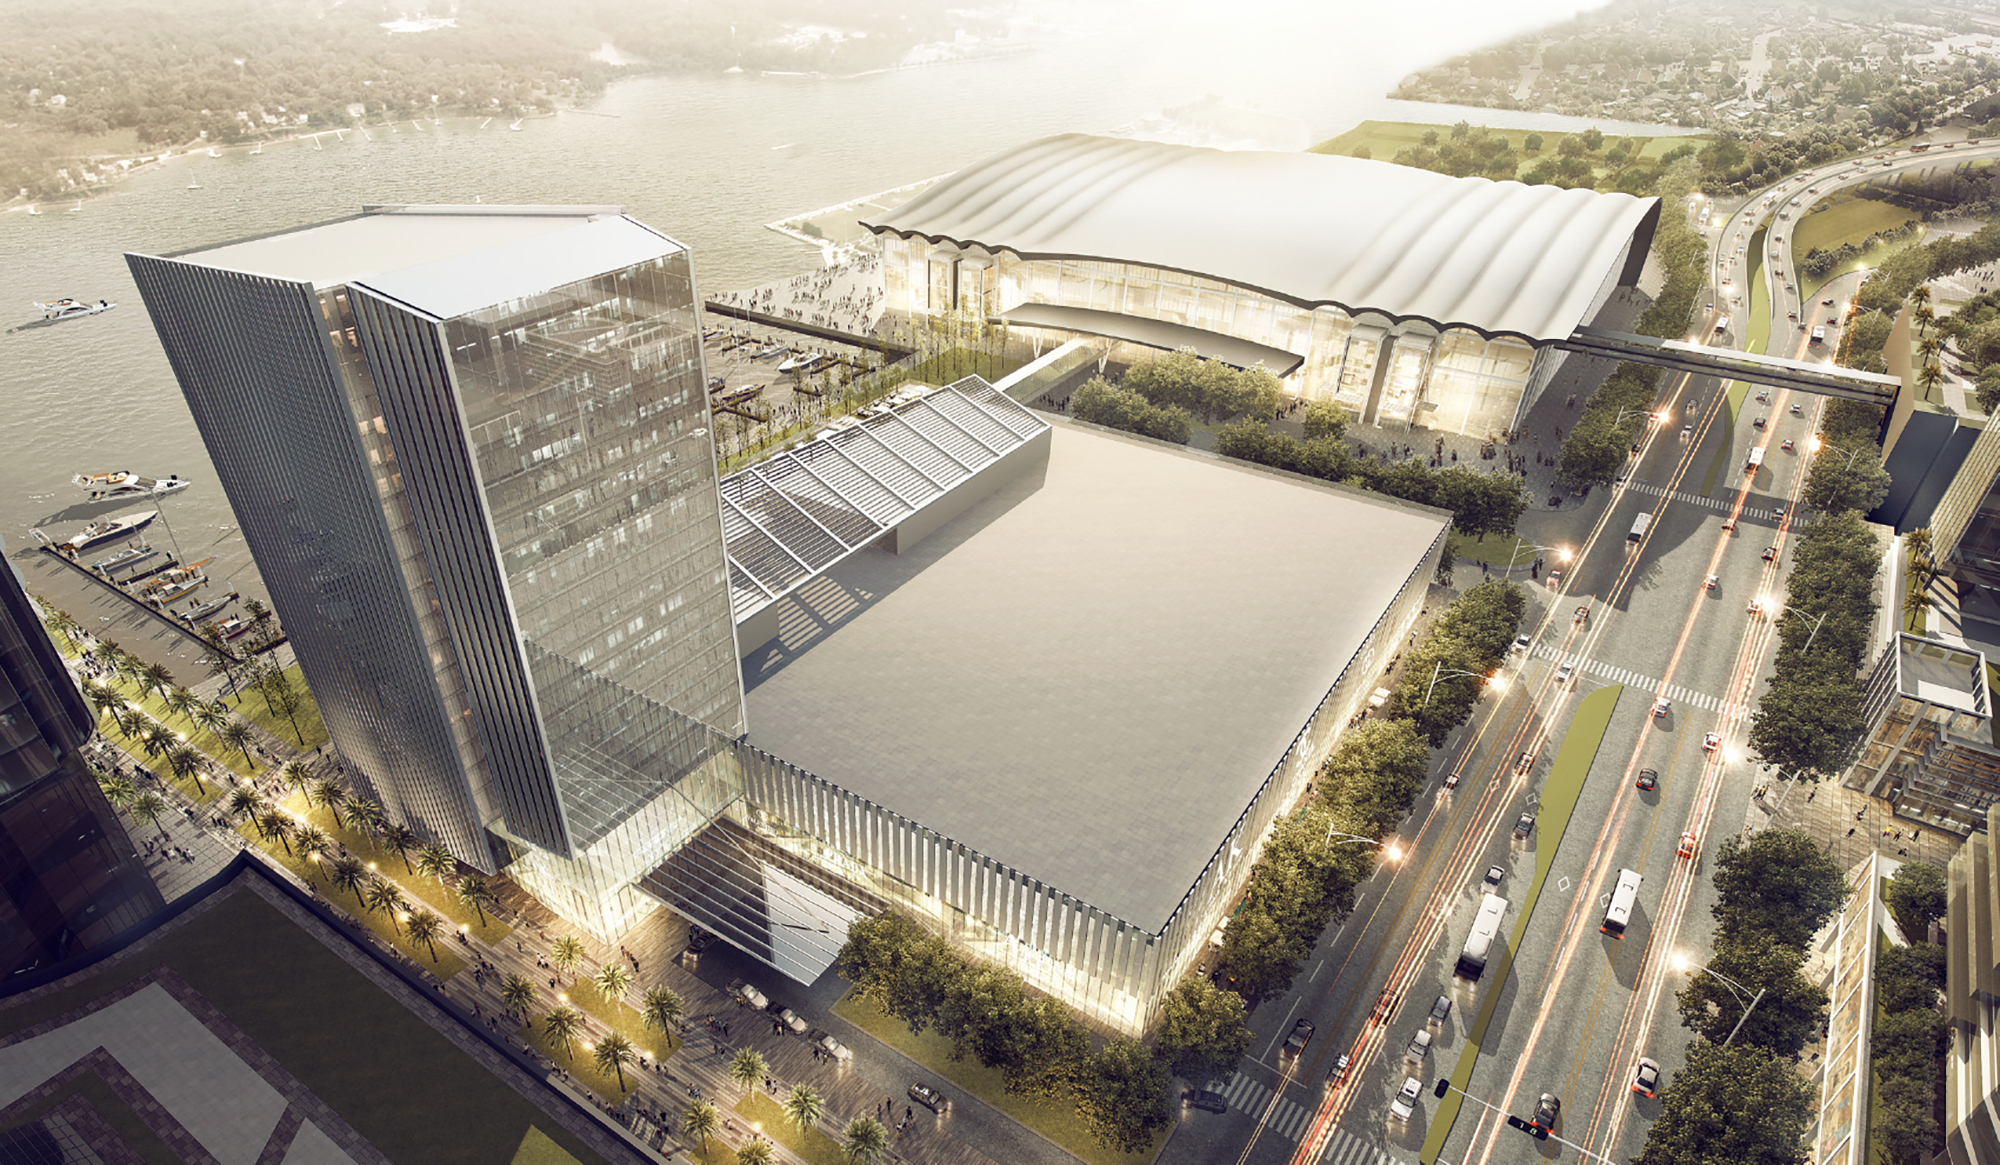 Jacksonville Jaguars owner Shad Khan wants to build convention center complex along the St. Johns River at Metropolitan Park.